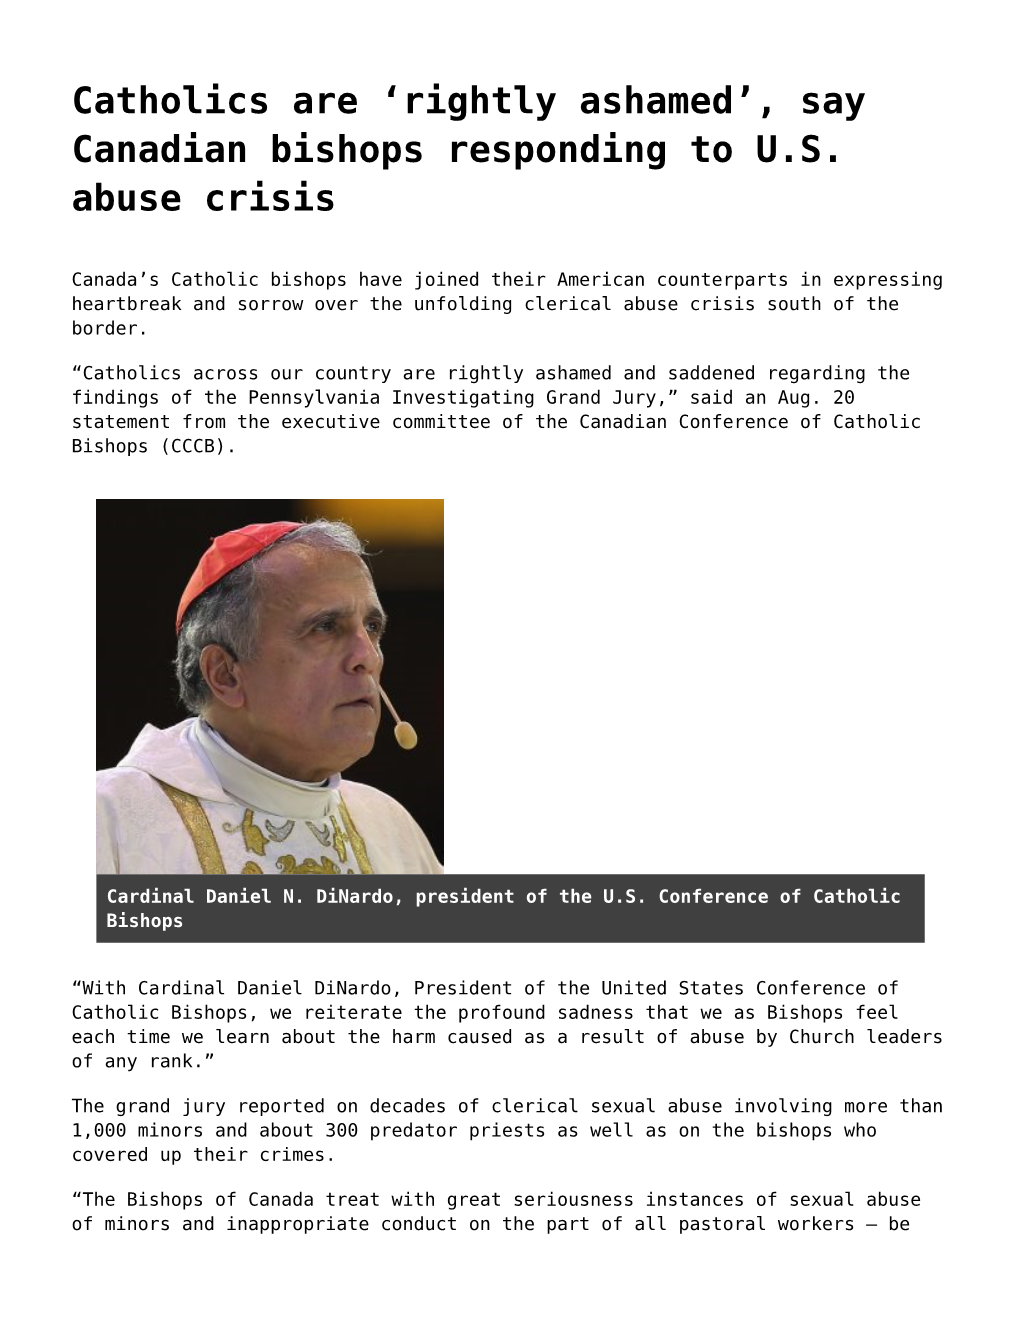 Say Canadian Bishops Responding to US Abuse Crisis